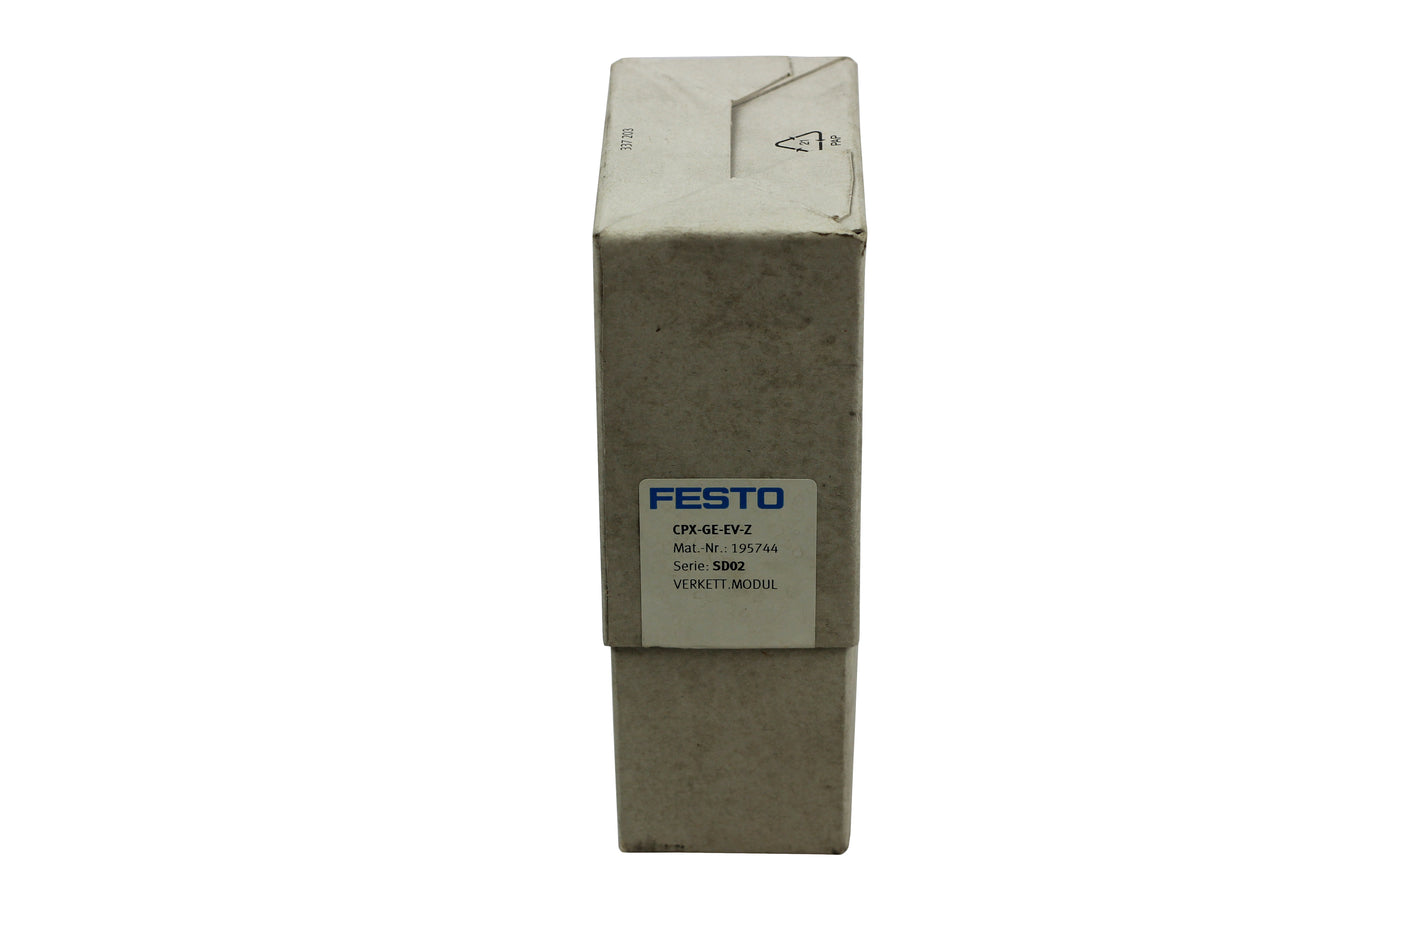 Festo CPX-GE-EV-Z 195744 SD02 Verkettungsblock